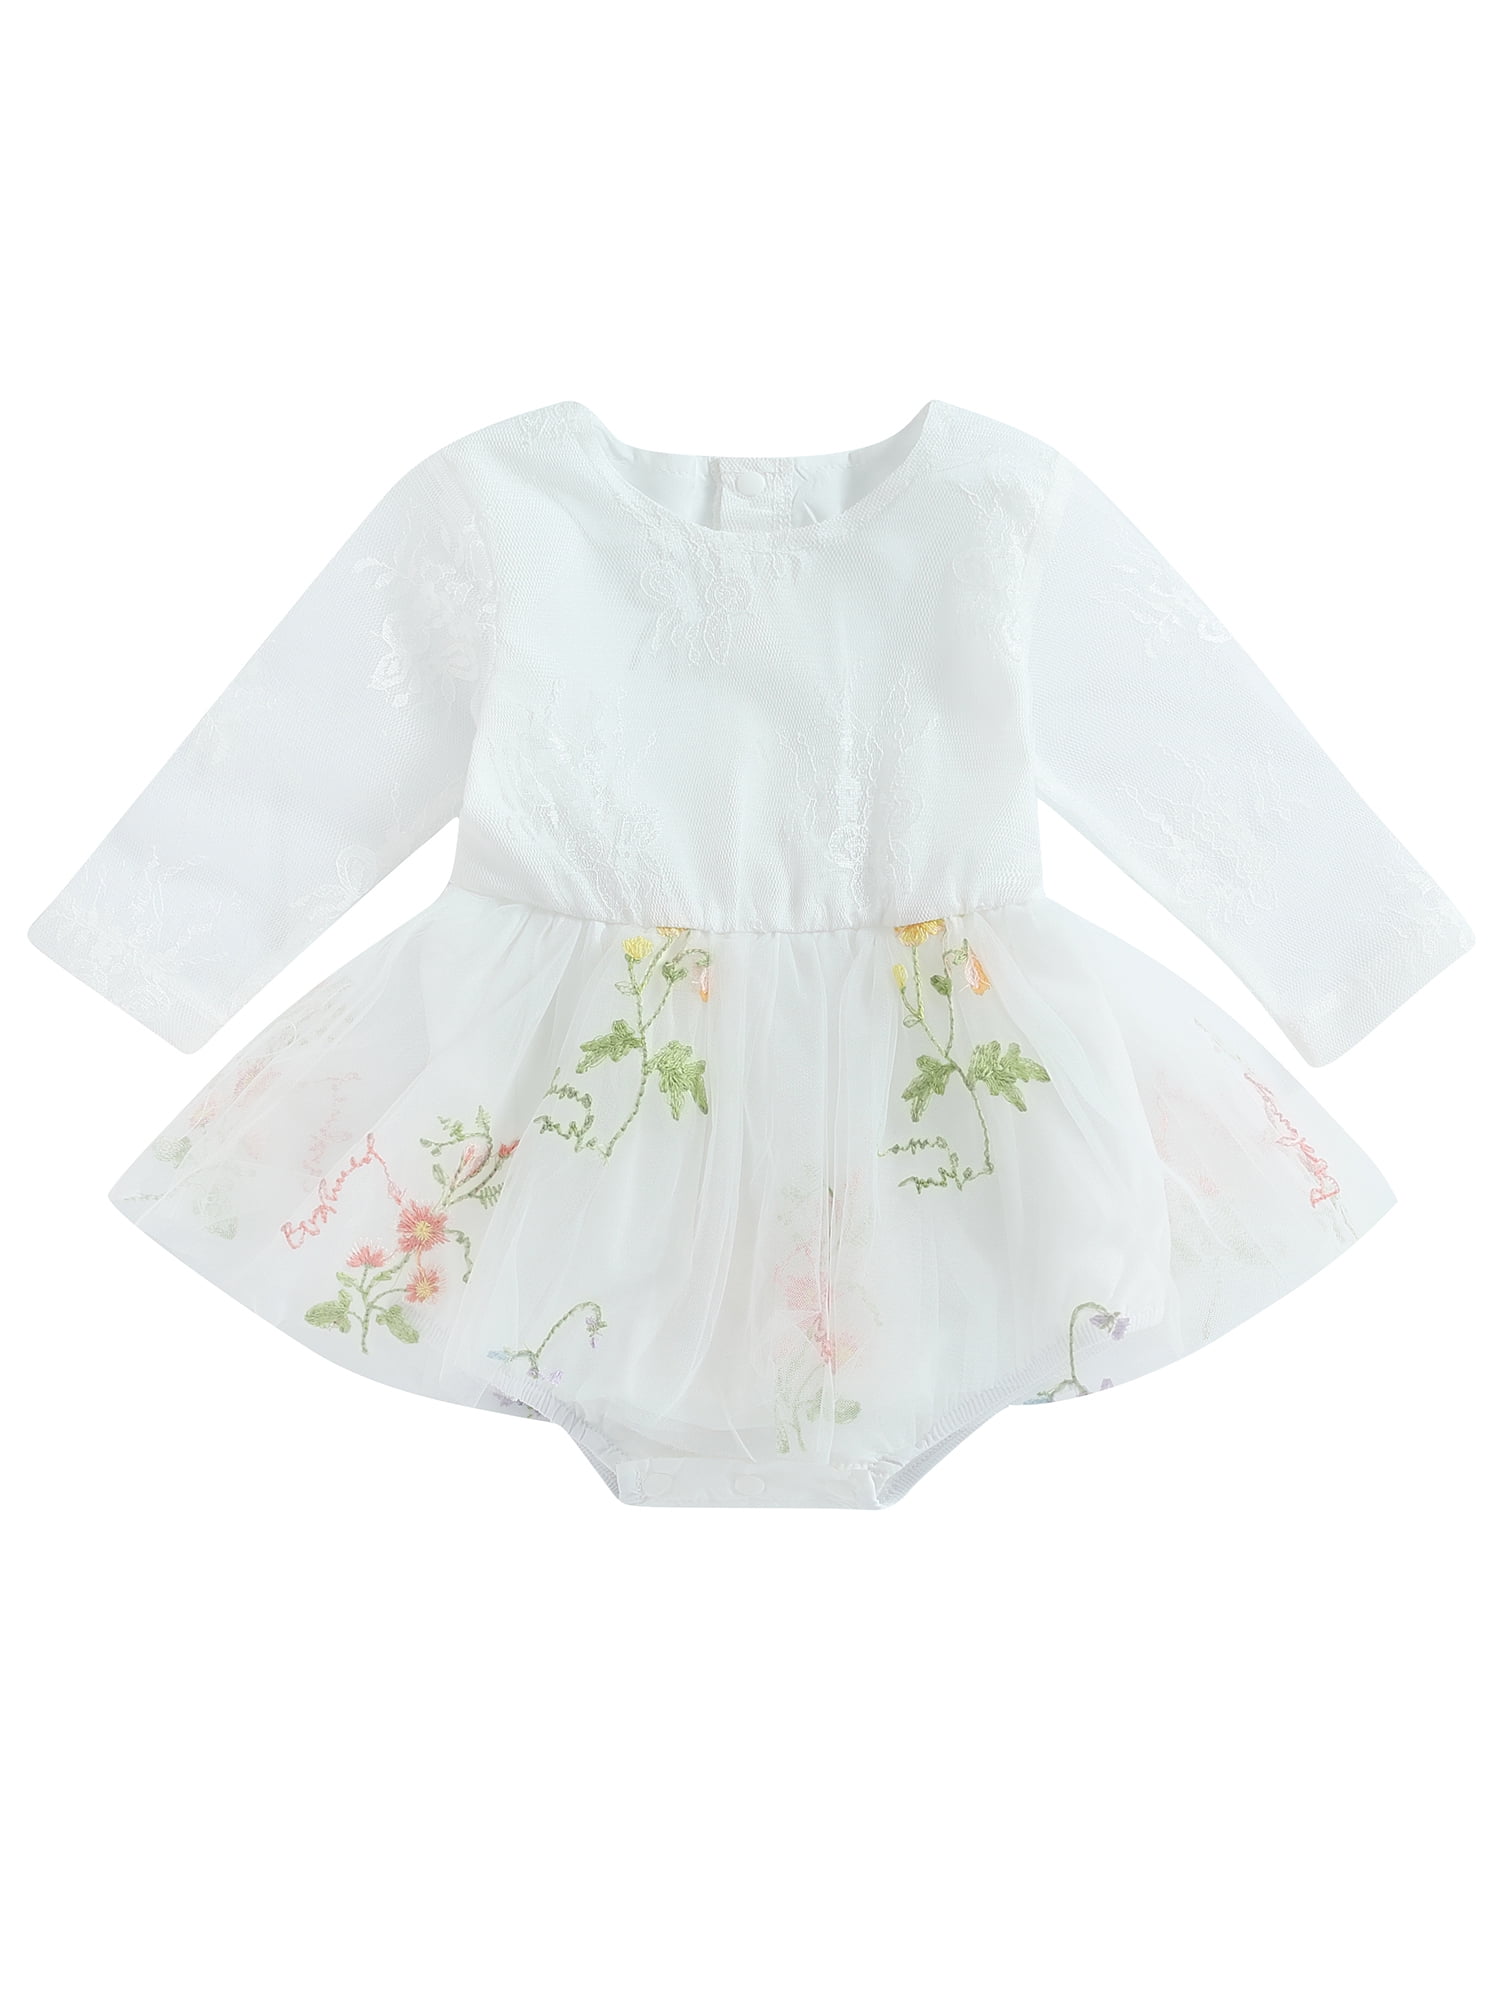 Bagilaanoe Newborn Baby Girl Rompers Dress Butterfly Flower Embroidery ...